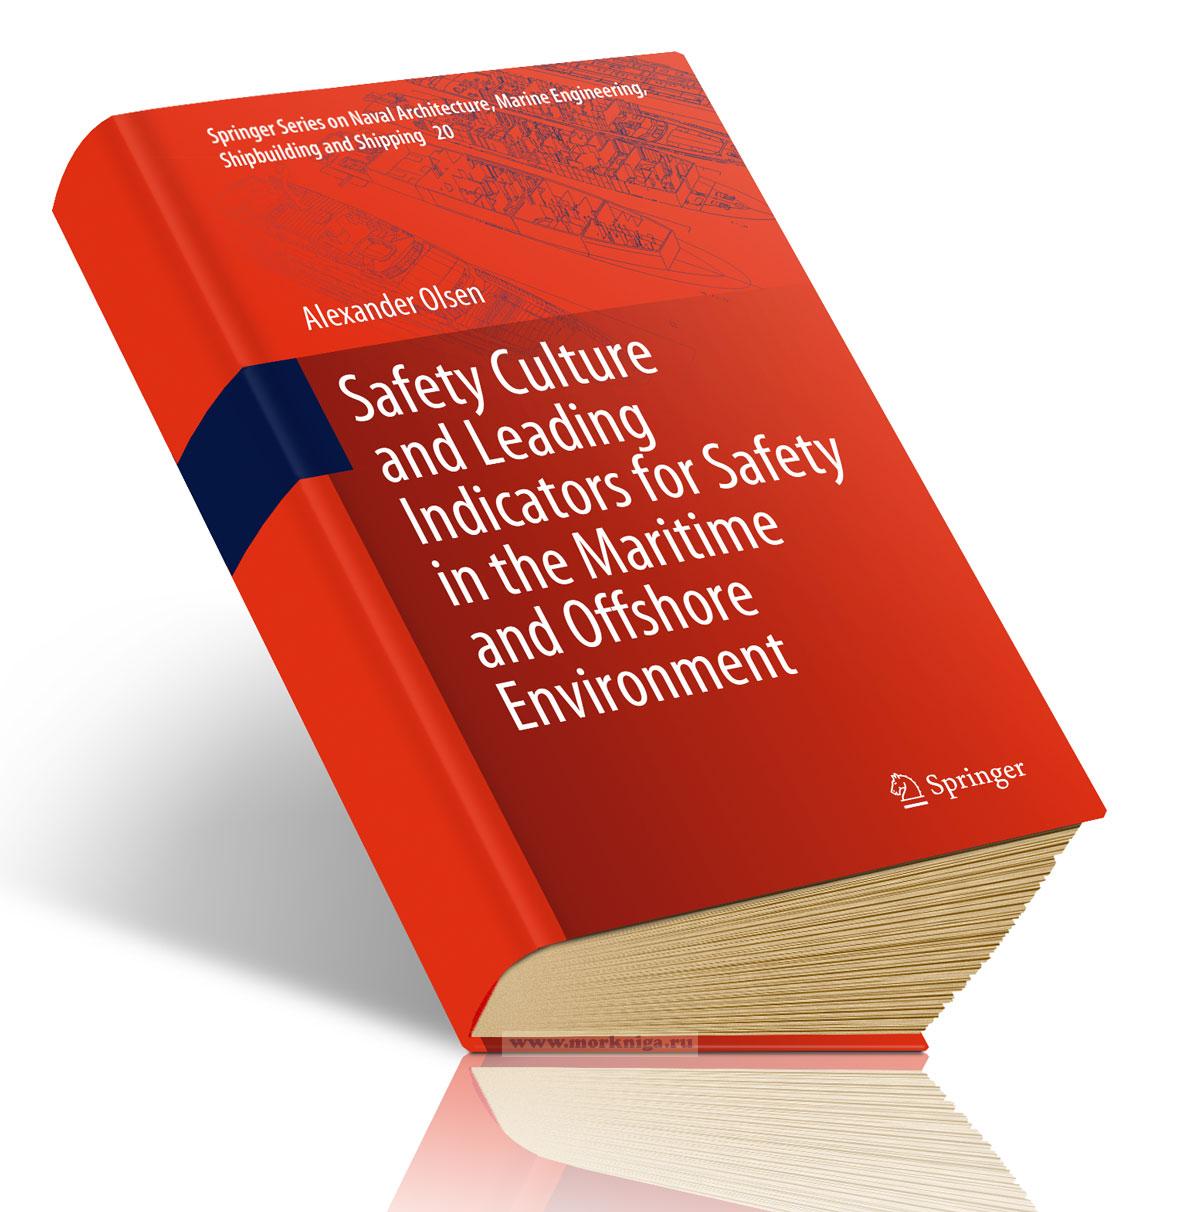 Safety Culture and Leading Indicators for Safety in the Maritime and Offshore Environment (A. Olsen)/Культура безопасности и основные показатели безопасности в морской среде и на морских предприятиях